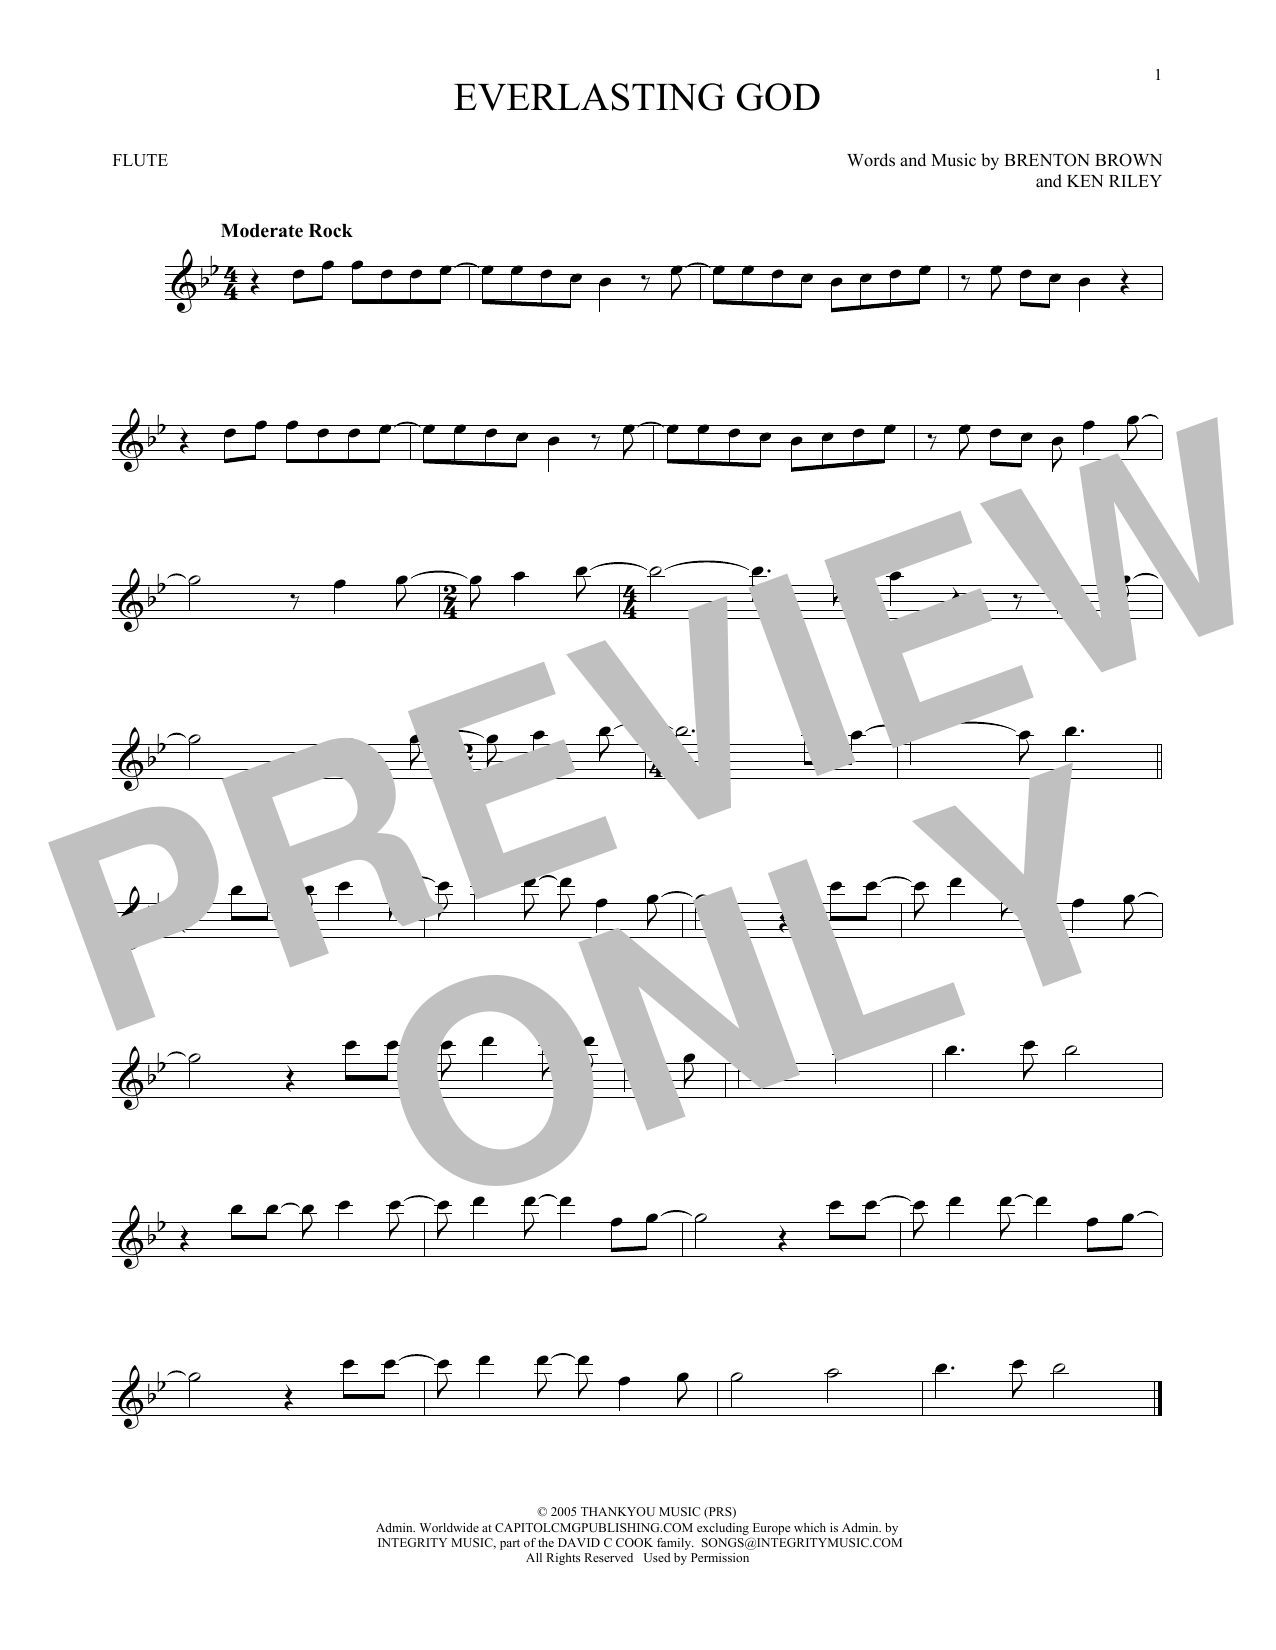 Chris Tomlin Everlasting God sheet music notes printable PDF score